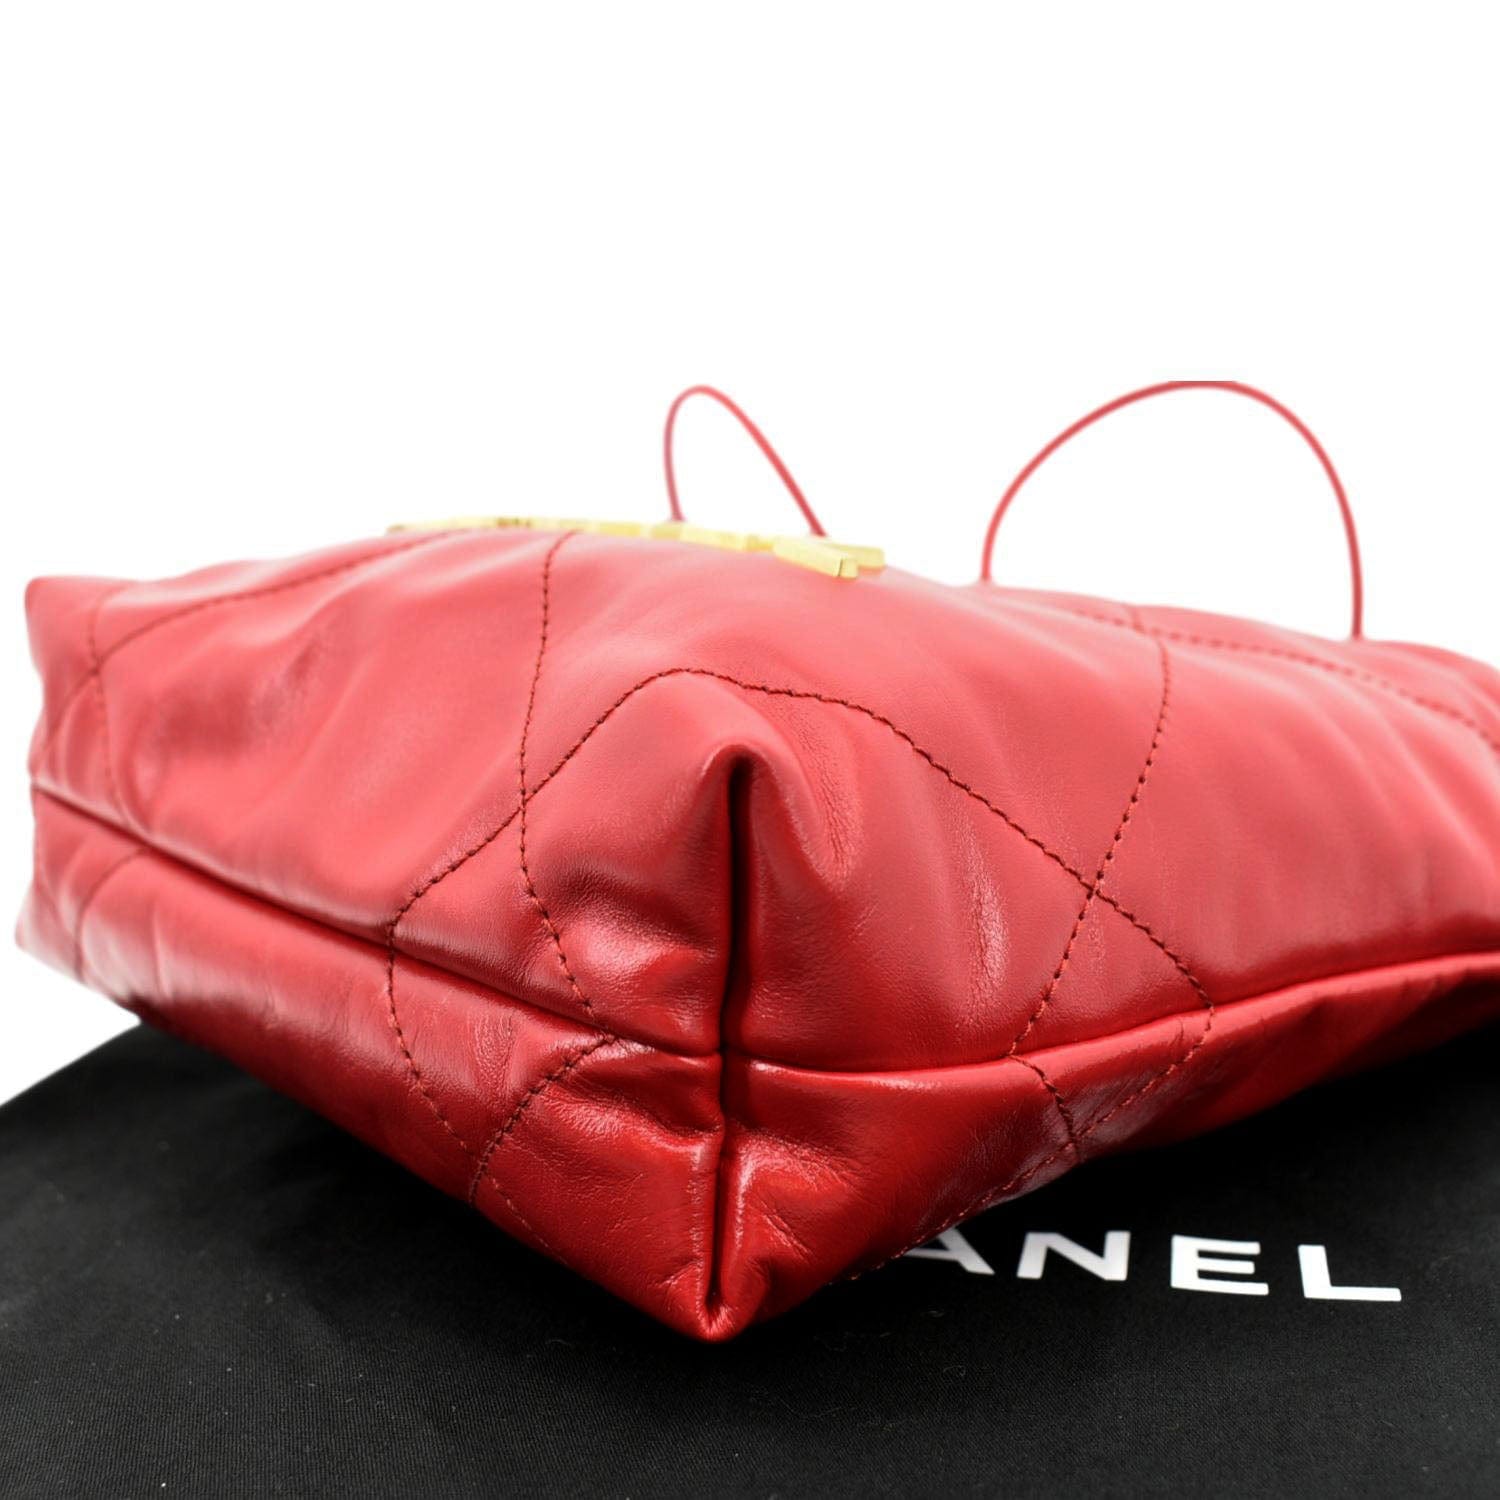 Chanel 22 Handbag - White